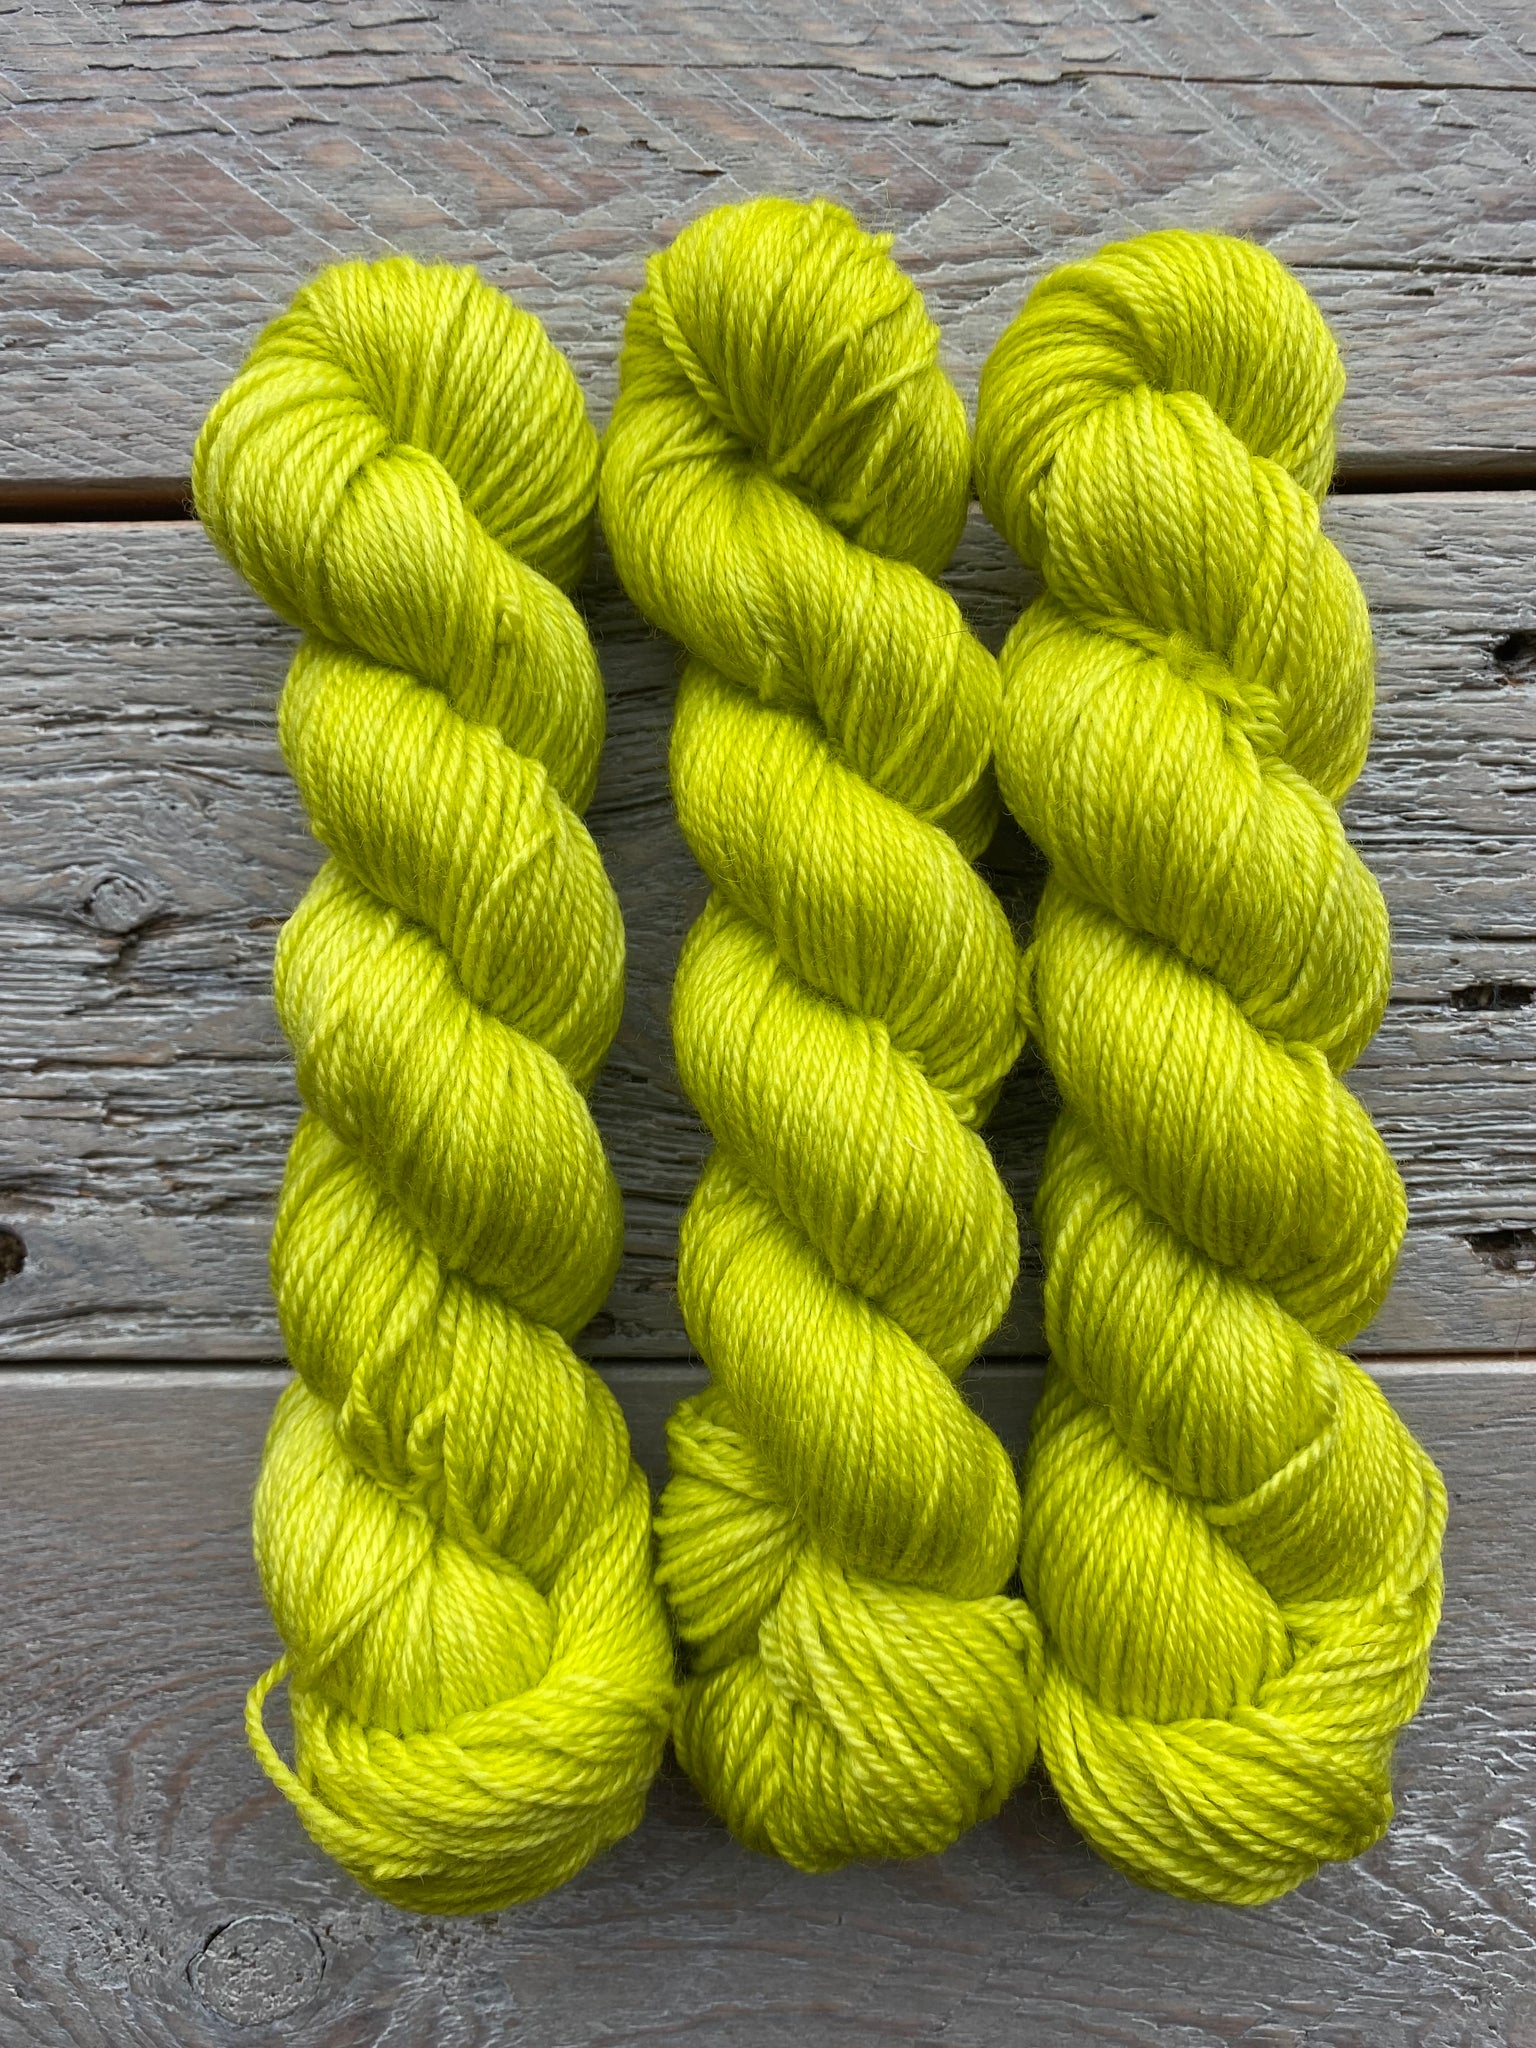 Chartreuse 50-gram mini skeins on Basic Sock